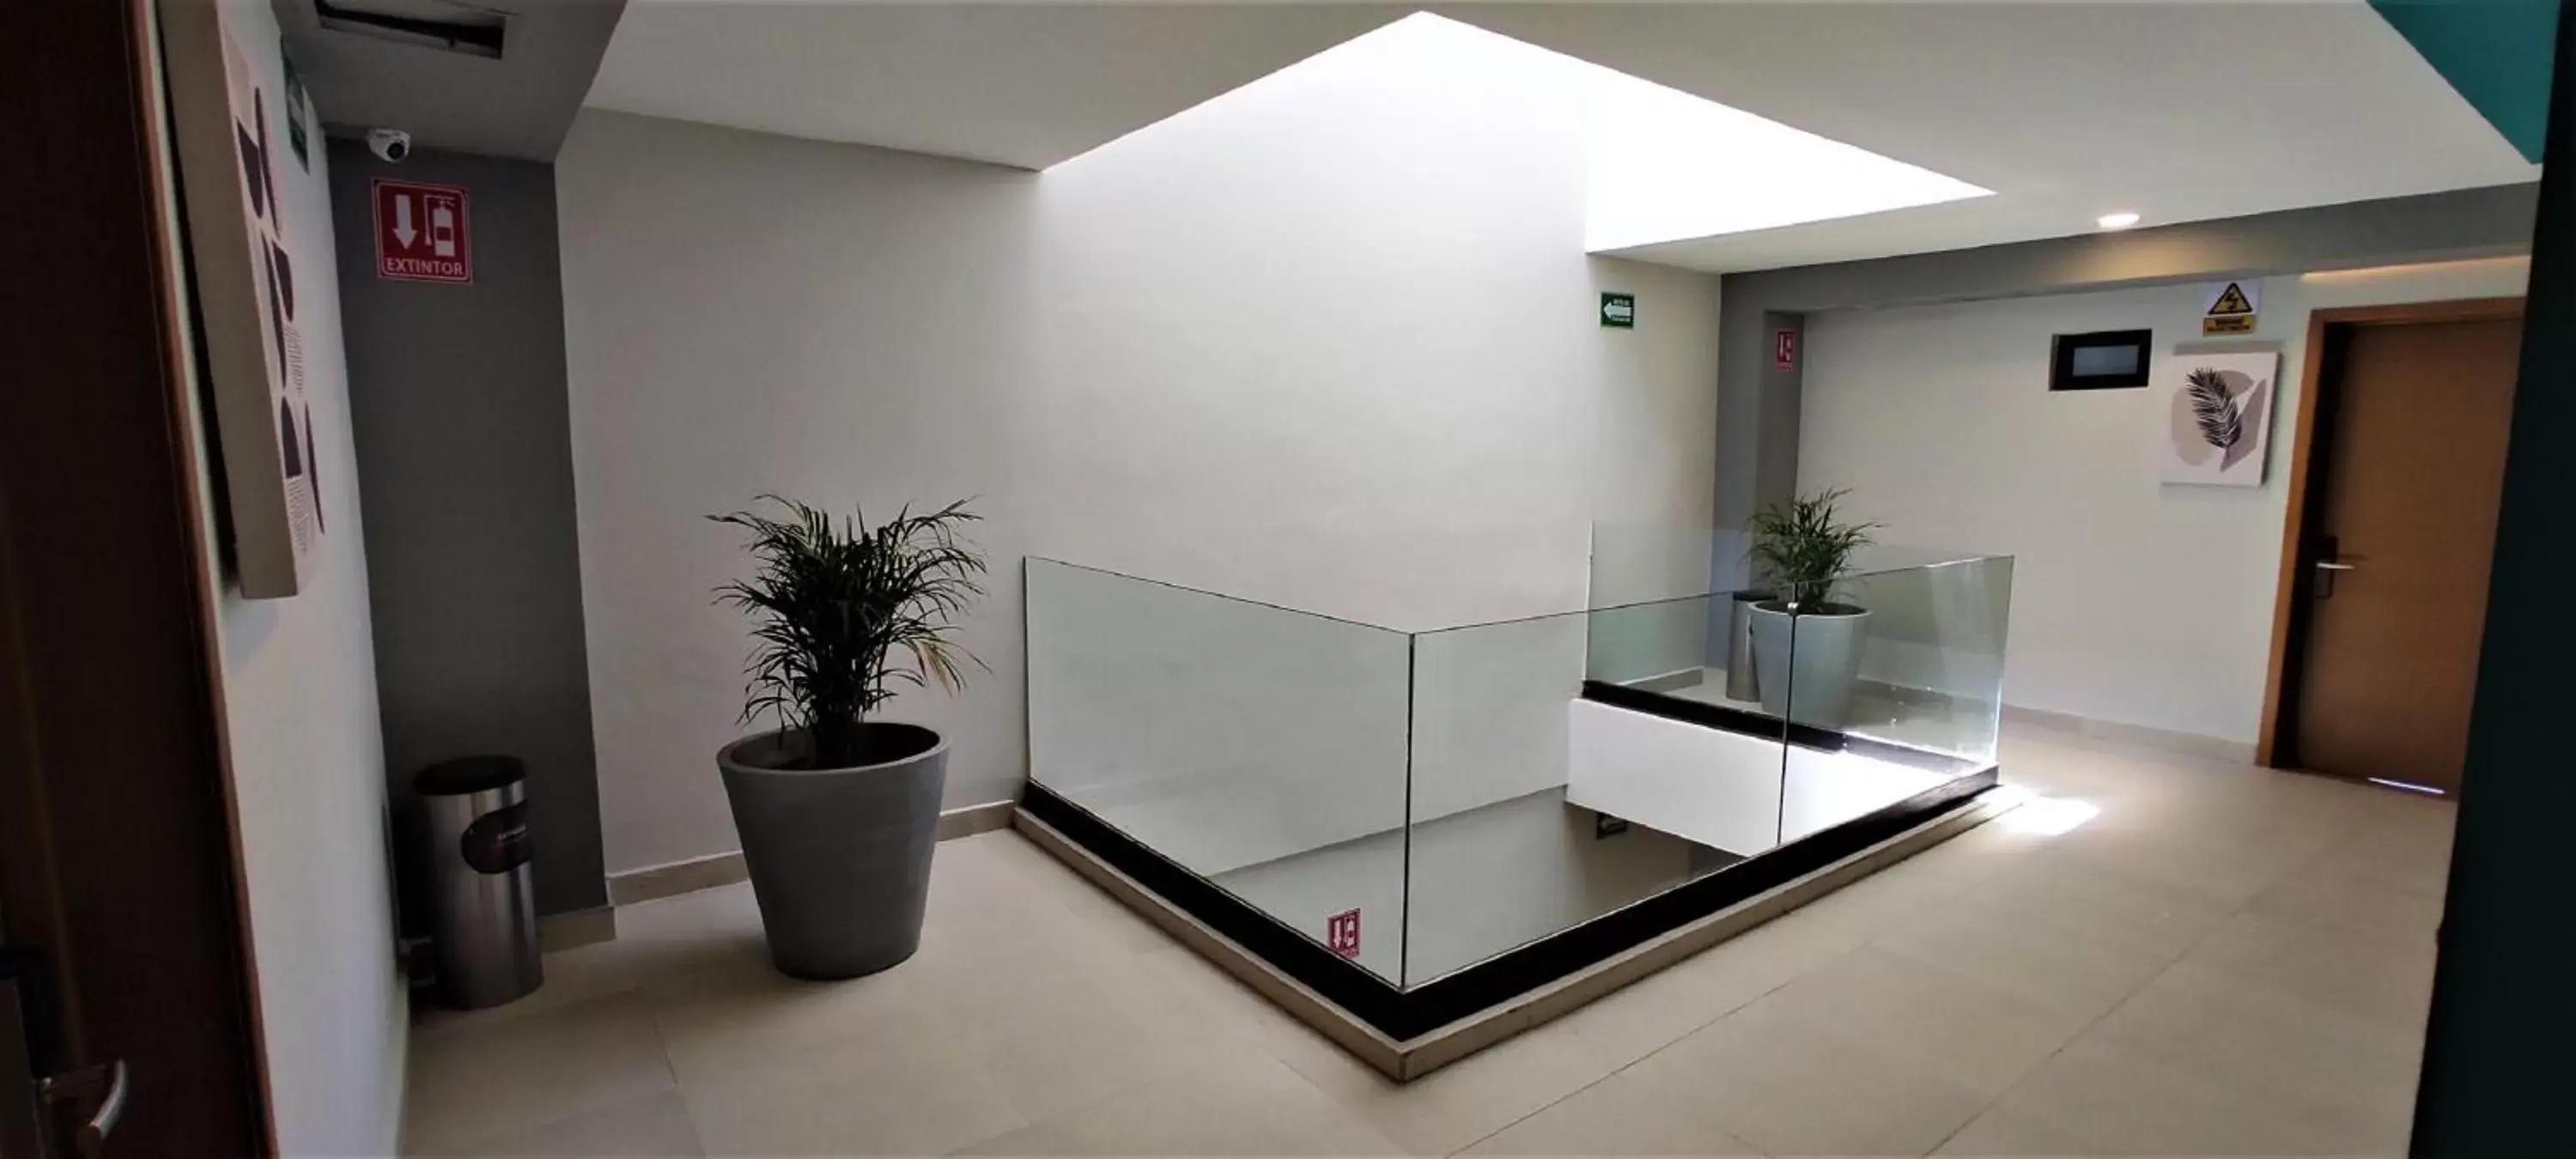 Area and facilities, Bathroom in Hotel Kavia Mazatlán